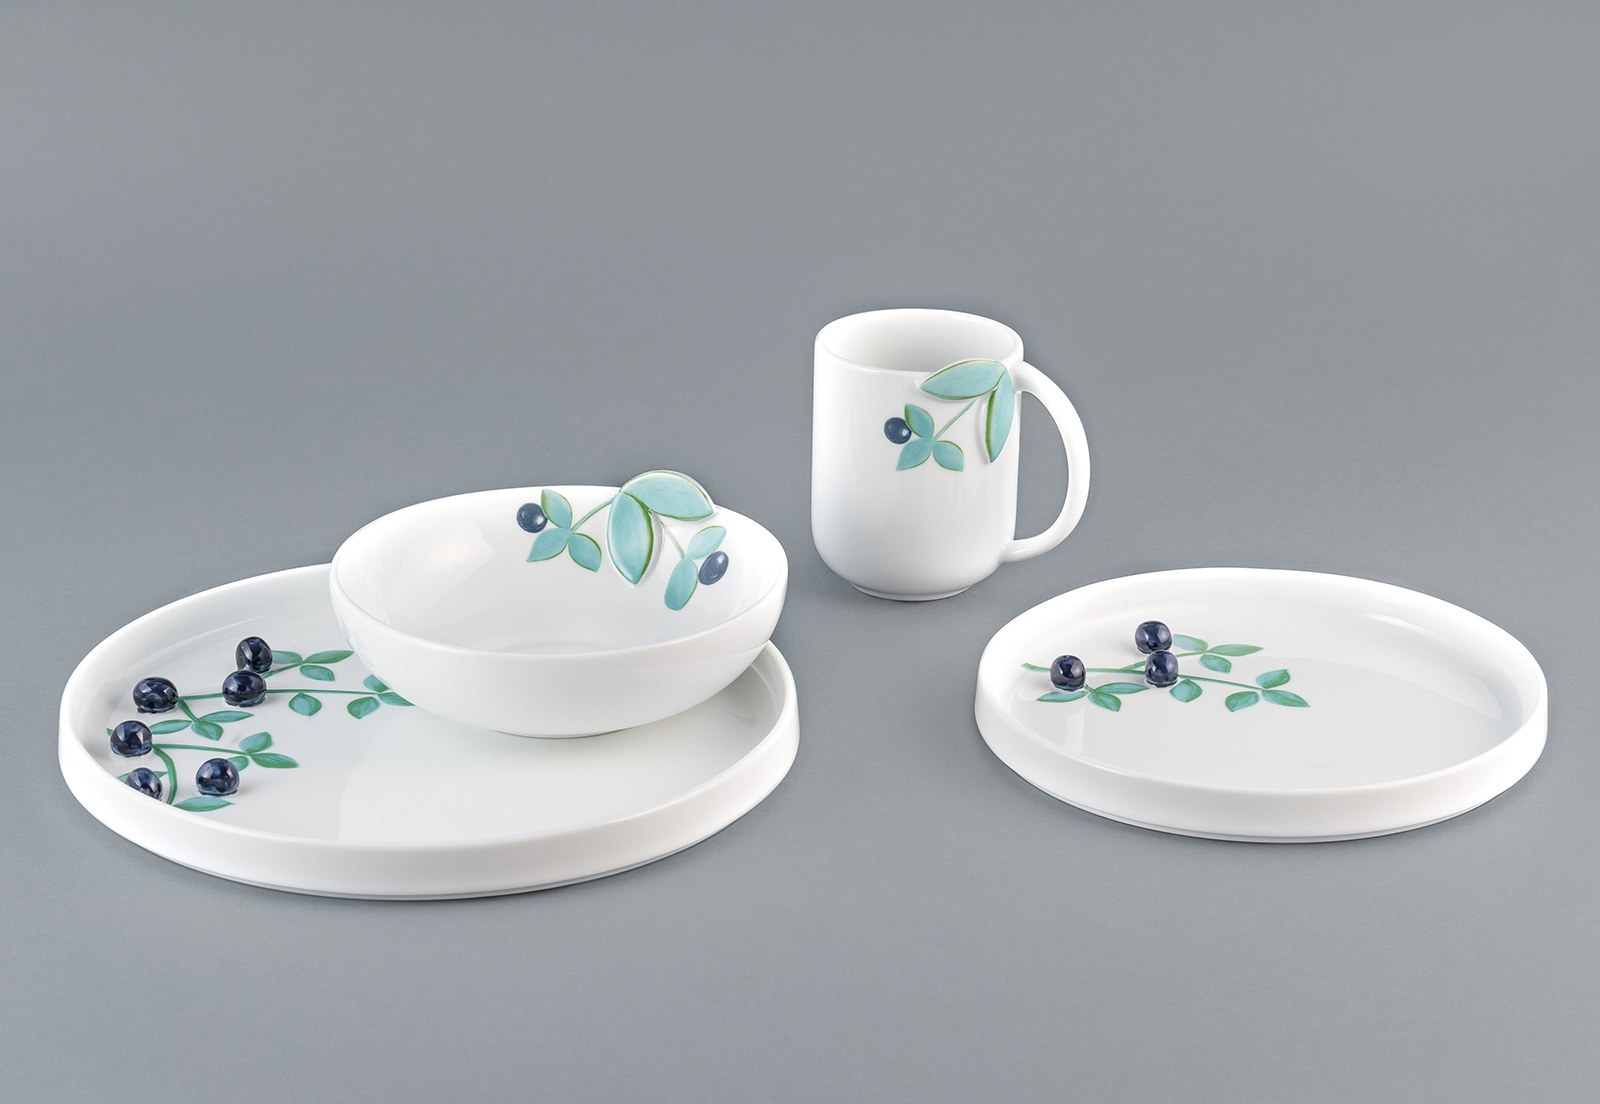 Greenwood porcelain by Alessandra Baldereschi